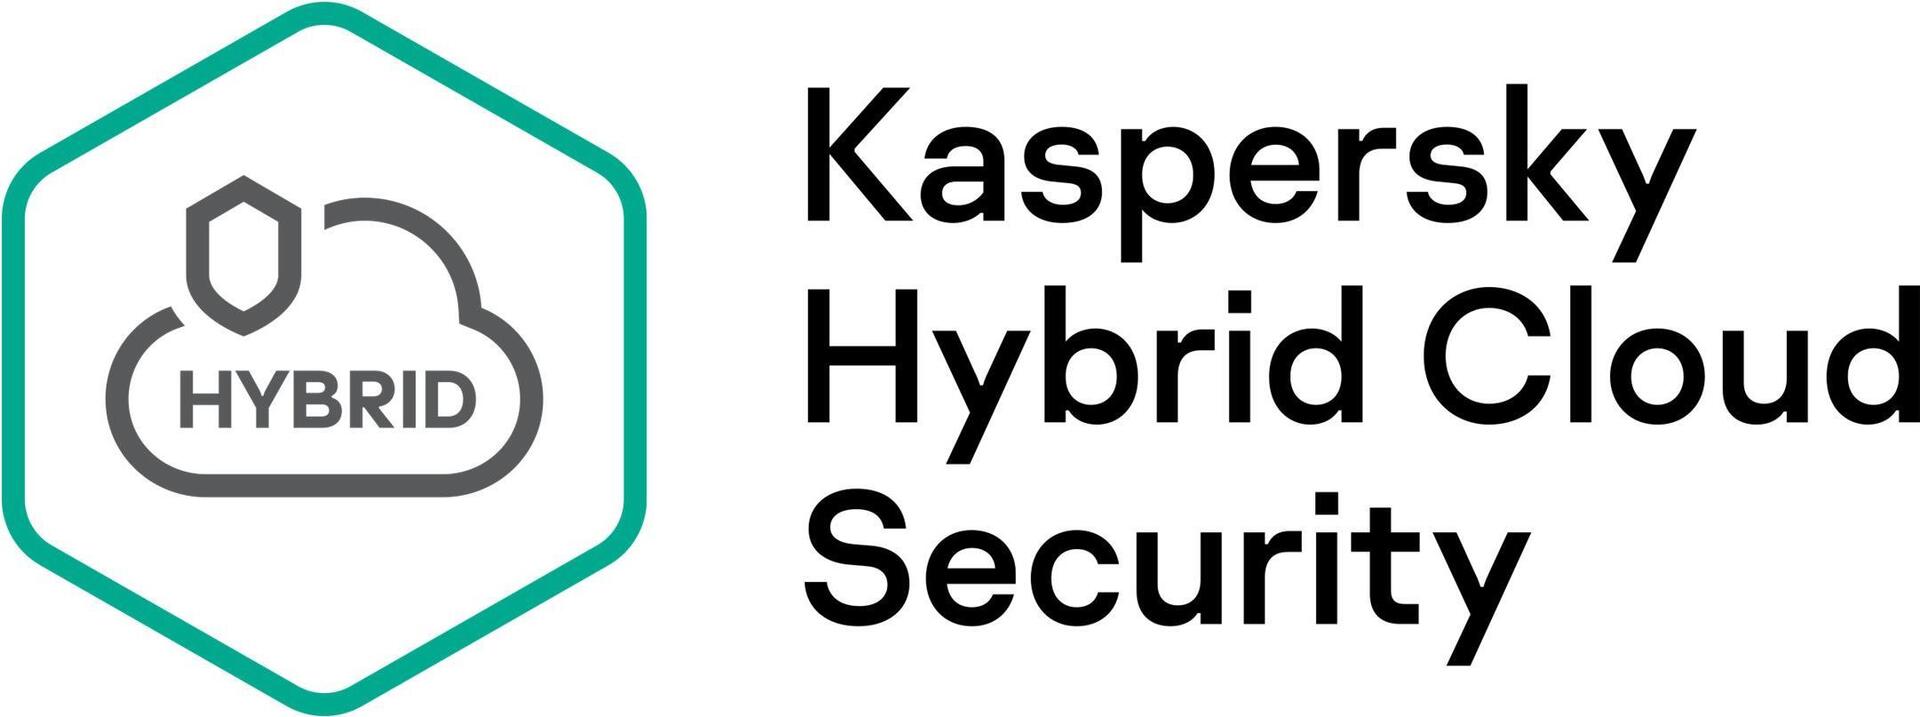 Kaspersky Hybrid Cloud Security Enterprise CPU European Edi. 4 - CPU 1-Year Renewal License (KL4553XADFR)